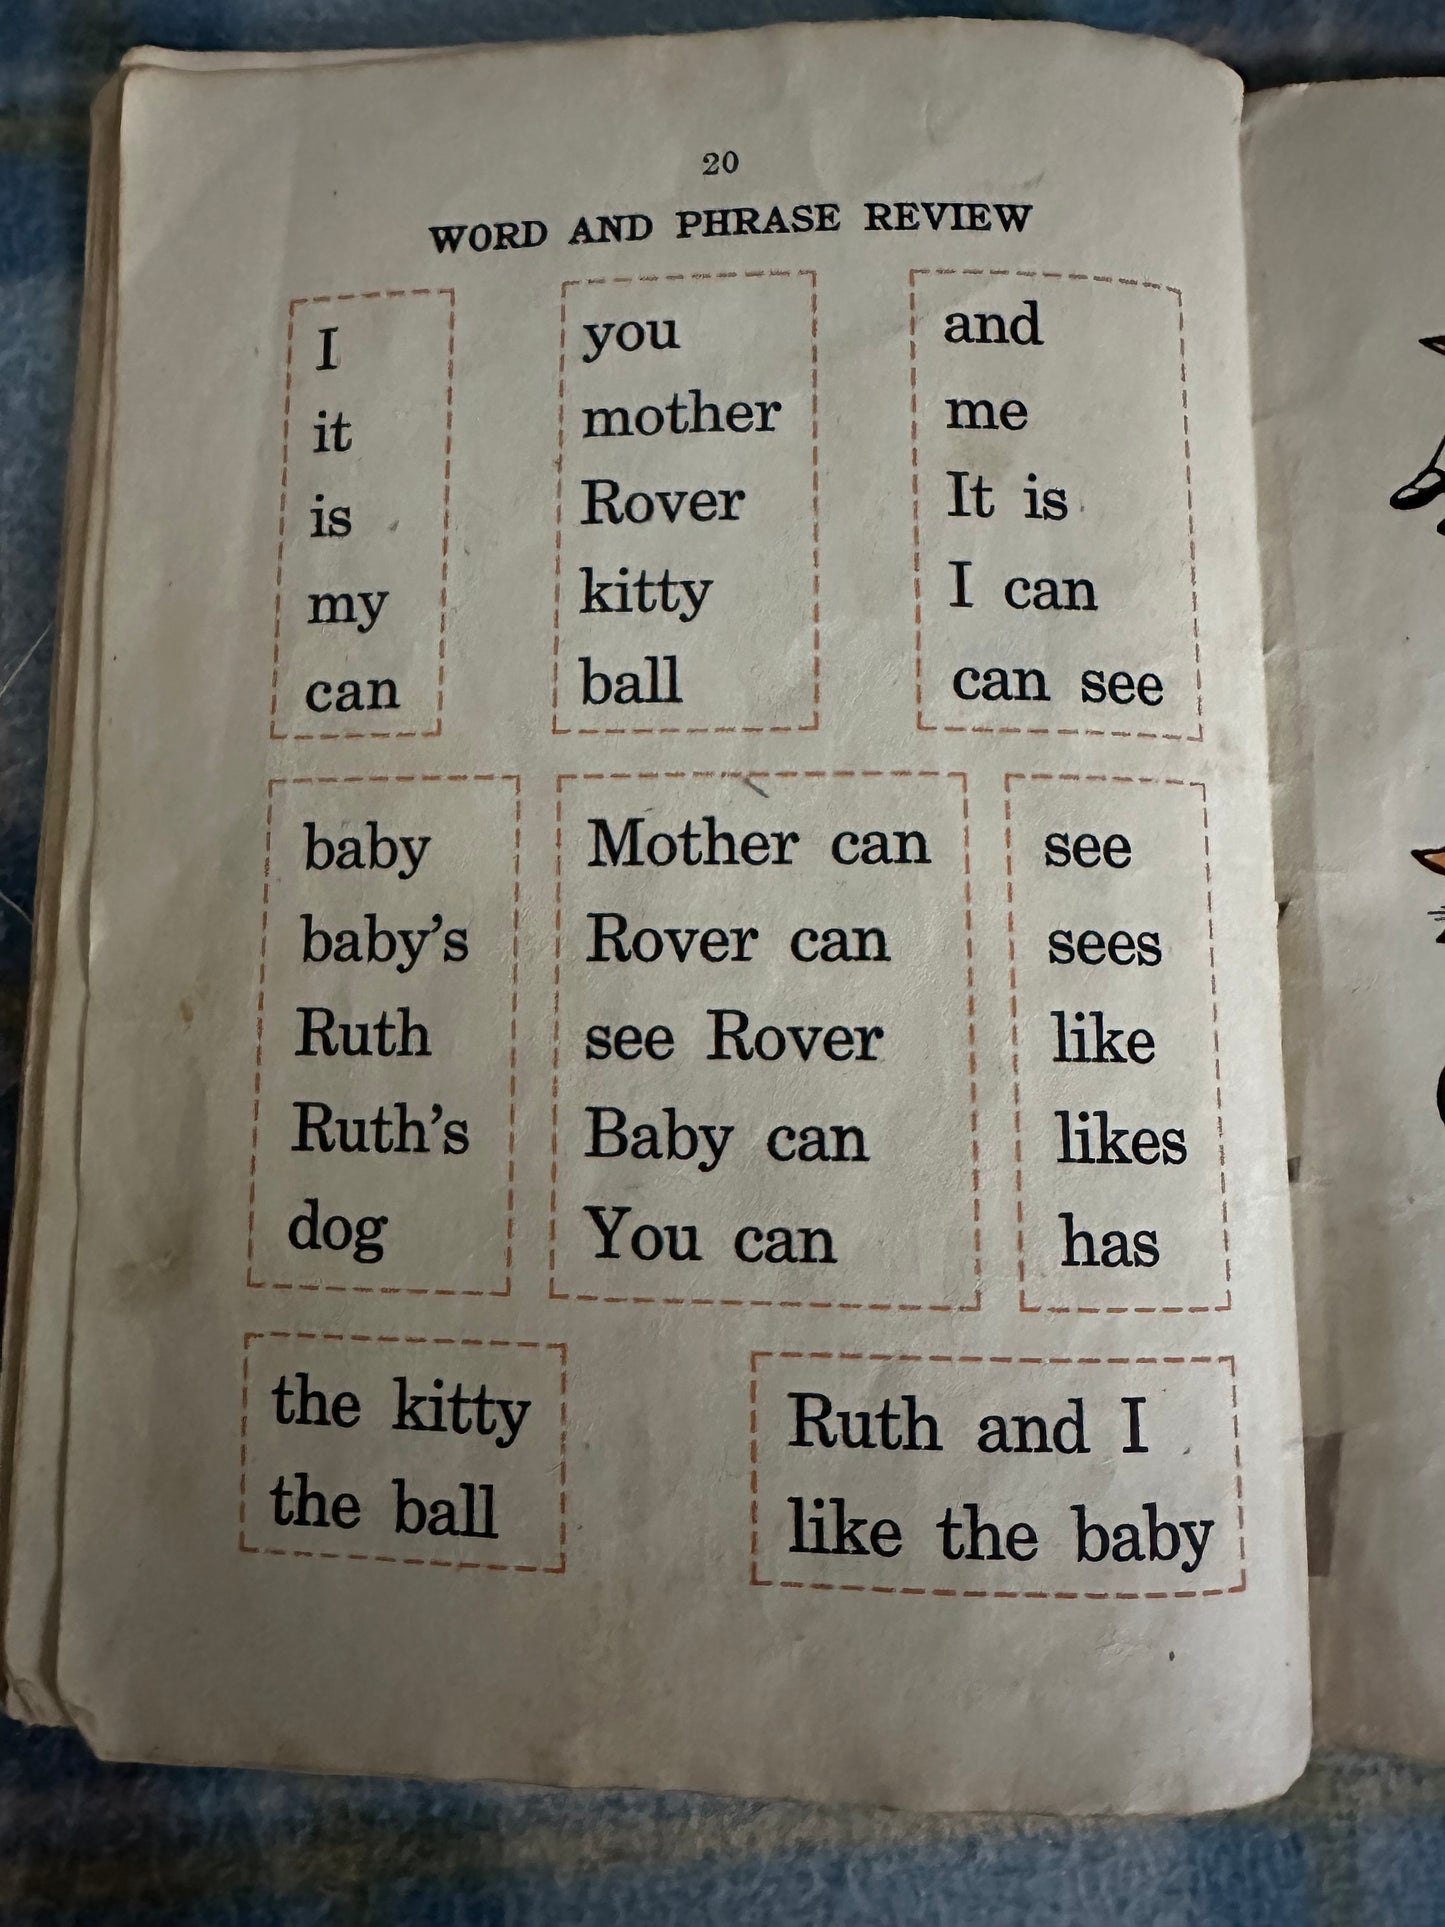 1934*1st* The Beacon Infant Readers(Introductory Book) M. E. Sullivan & P. M. Cox(Ginn & Co Ltd)